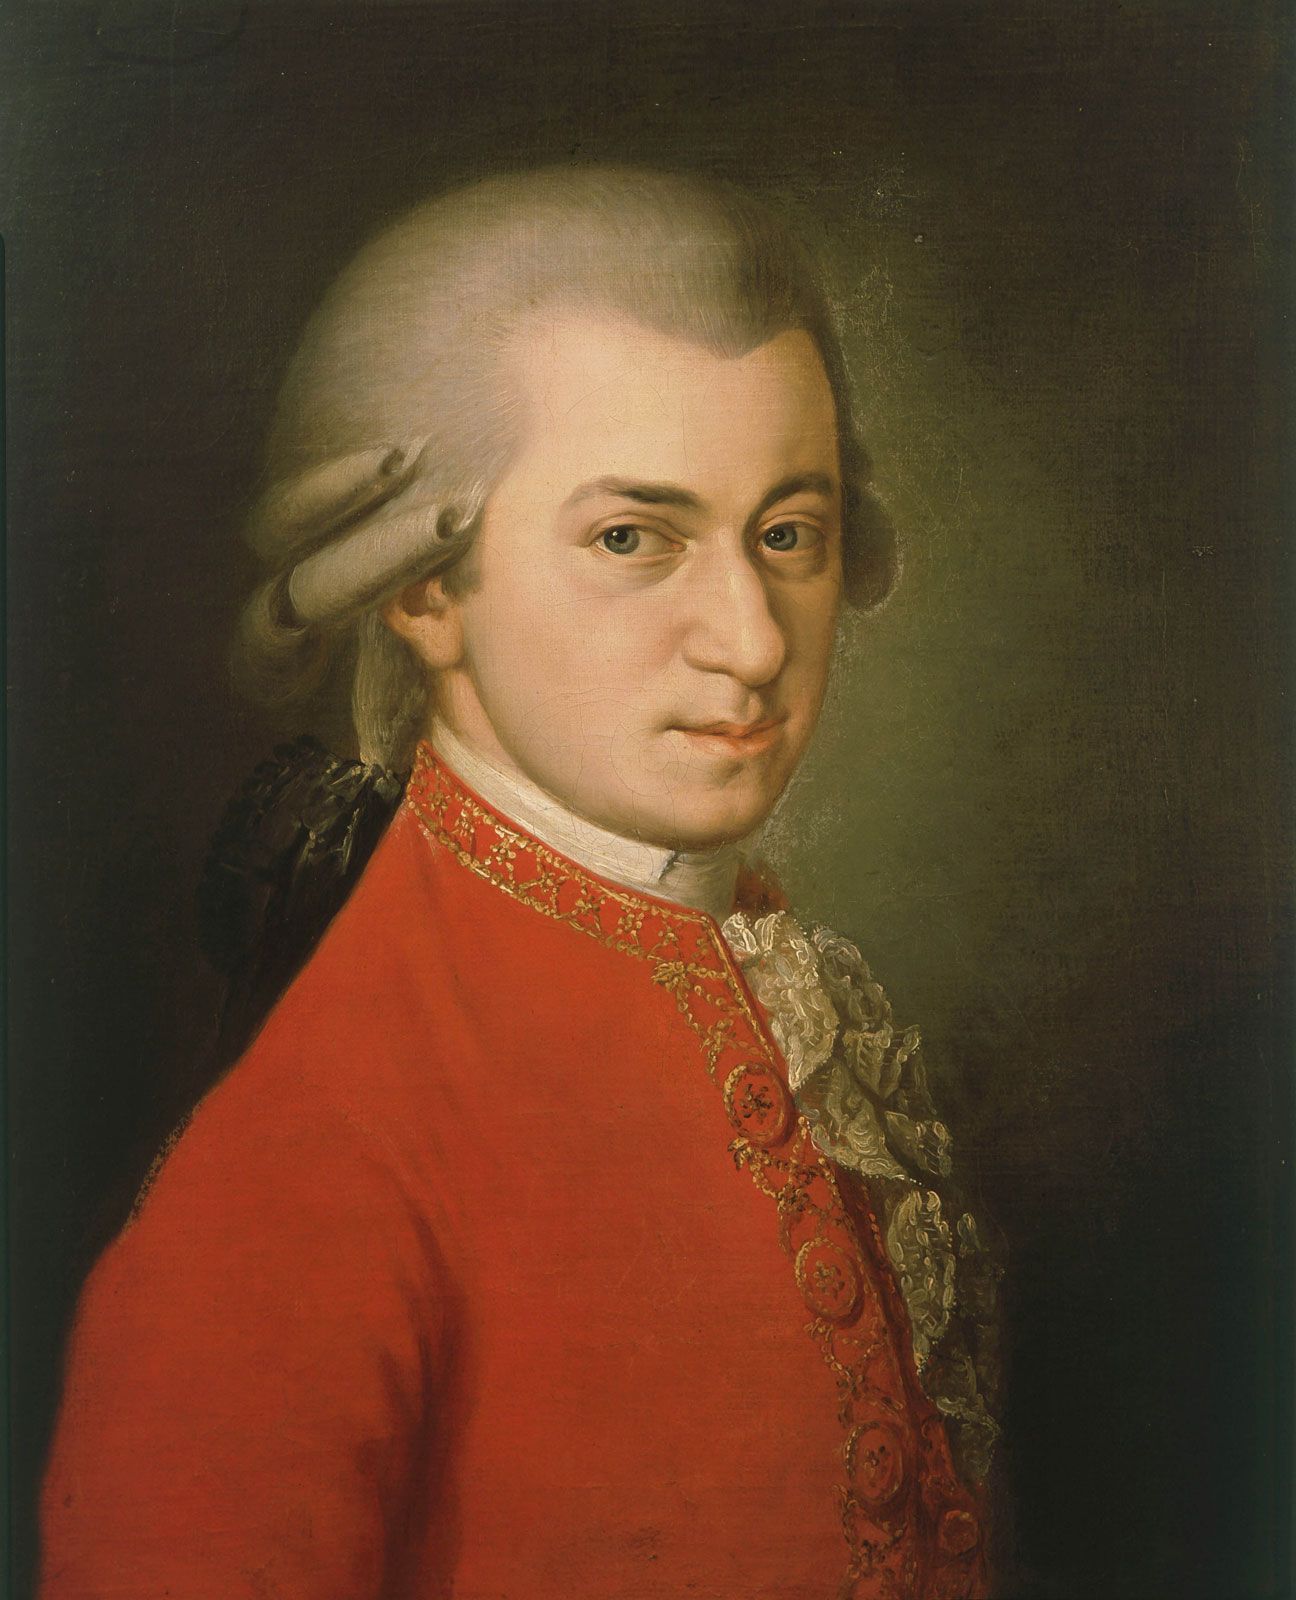  Biografie van Wolfgang Amadeus Mozart